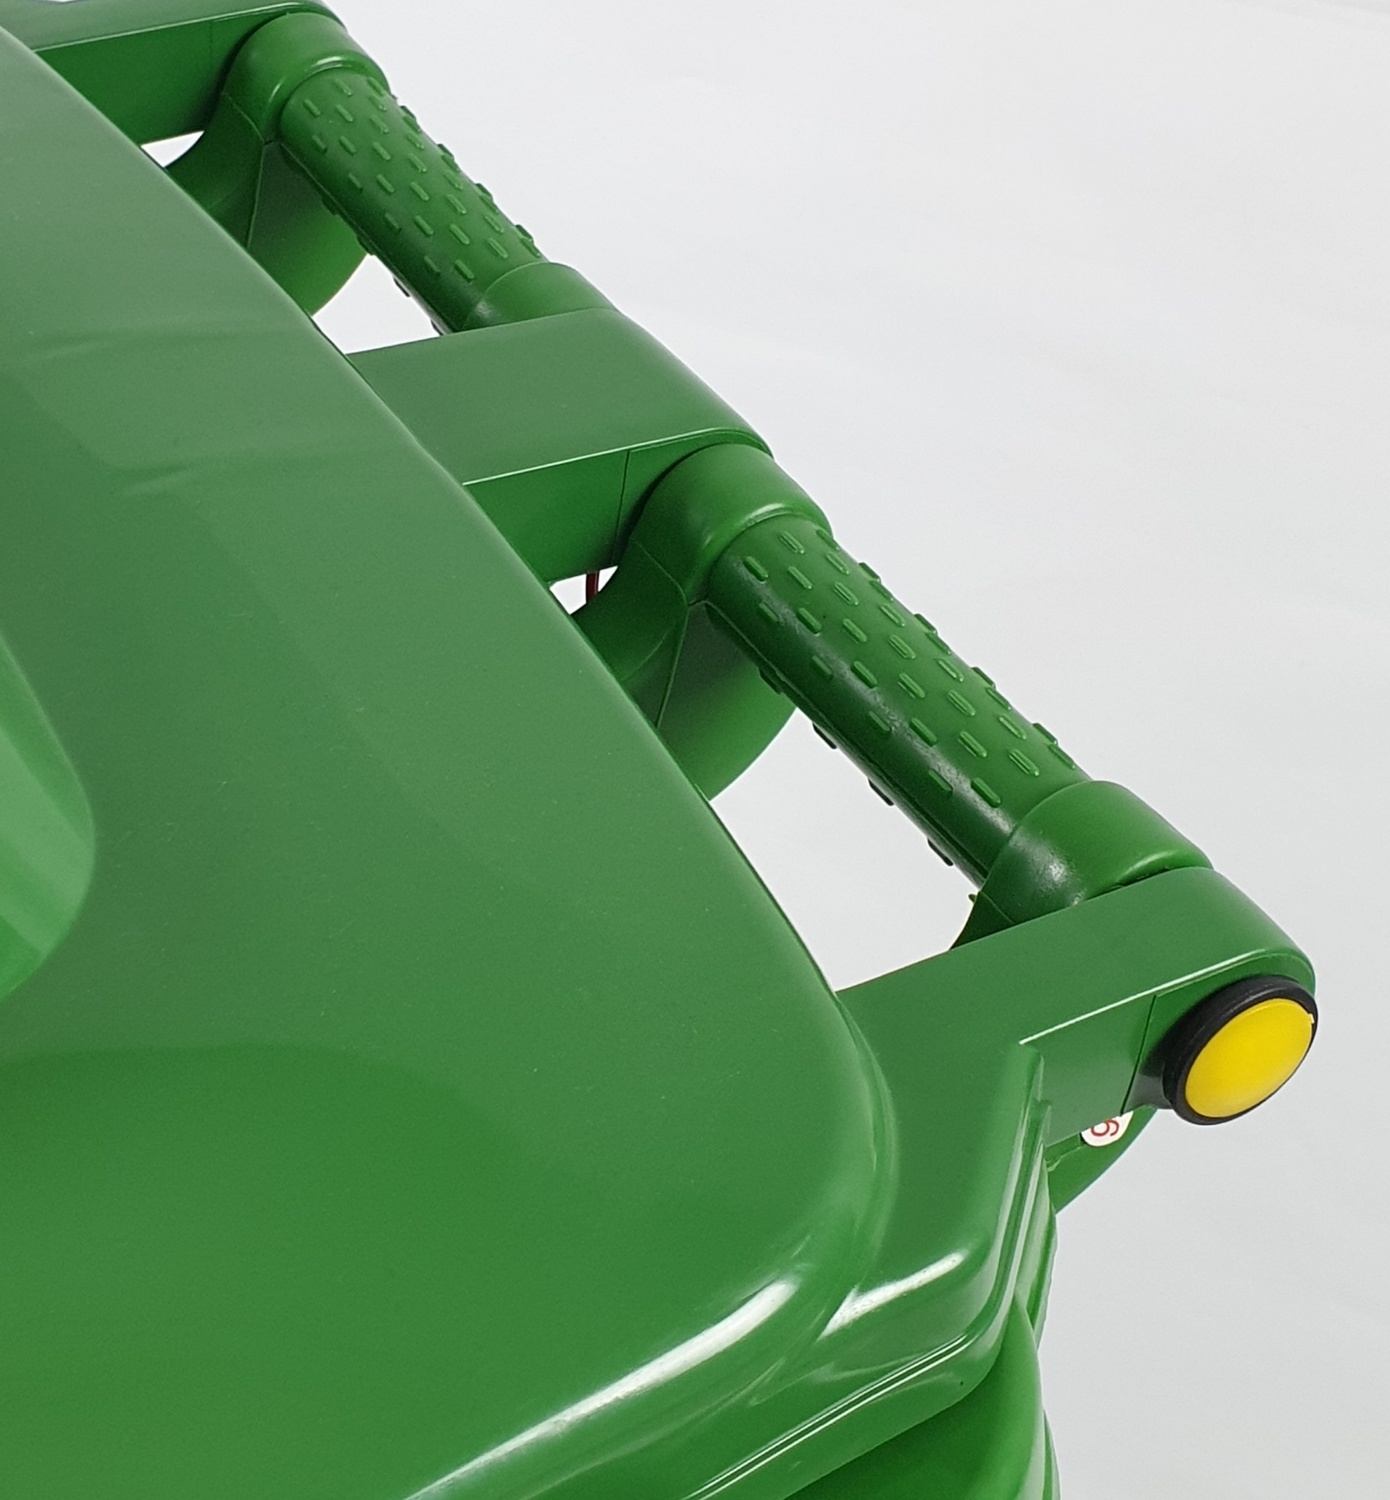 ICLEAN ถังขยะเทศบาลฝาเรียบทรงเหลี่ยม 120 ลิตร รุ่น XDL-120-14G สีเขียว (ขยะเปียก)